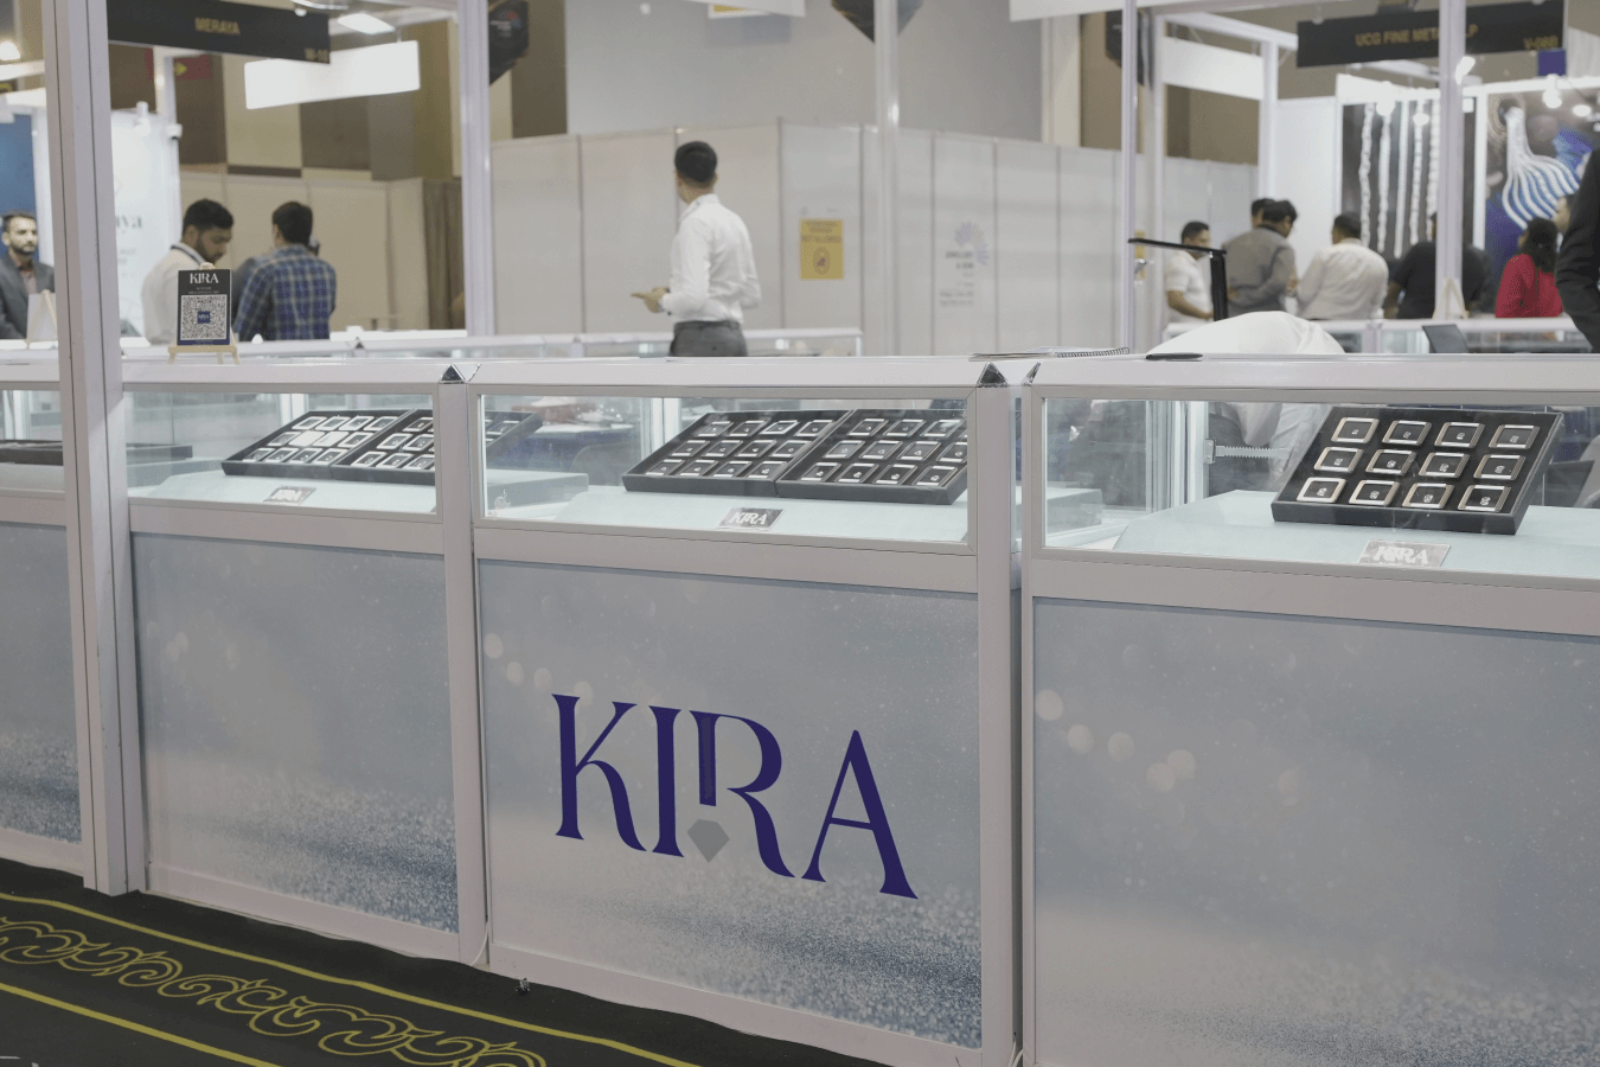 Kira Logo in a Exhibition